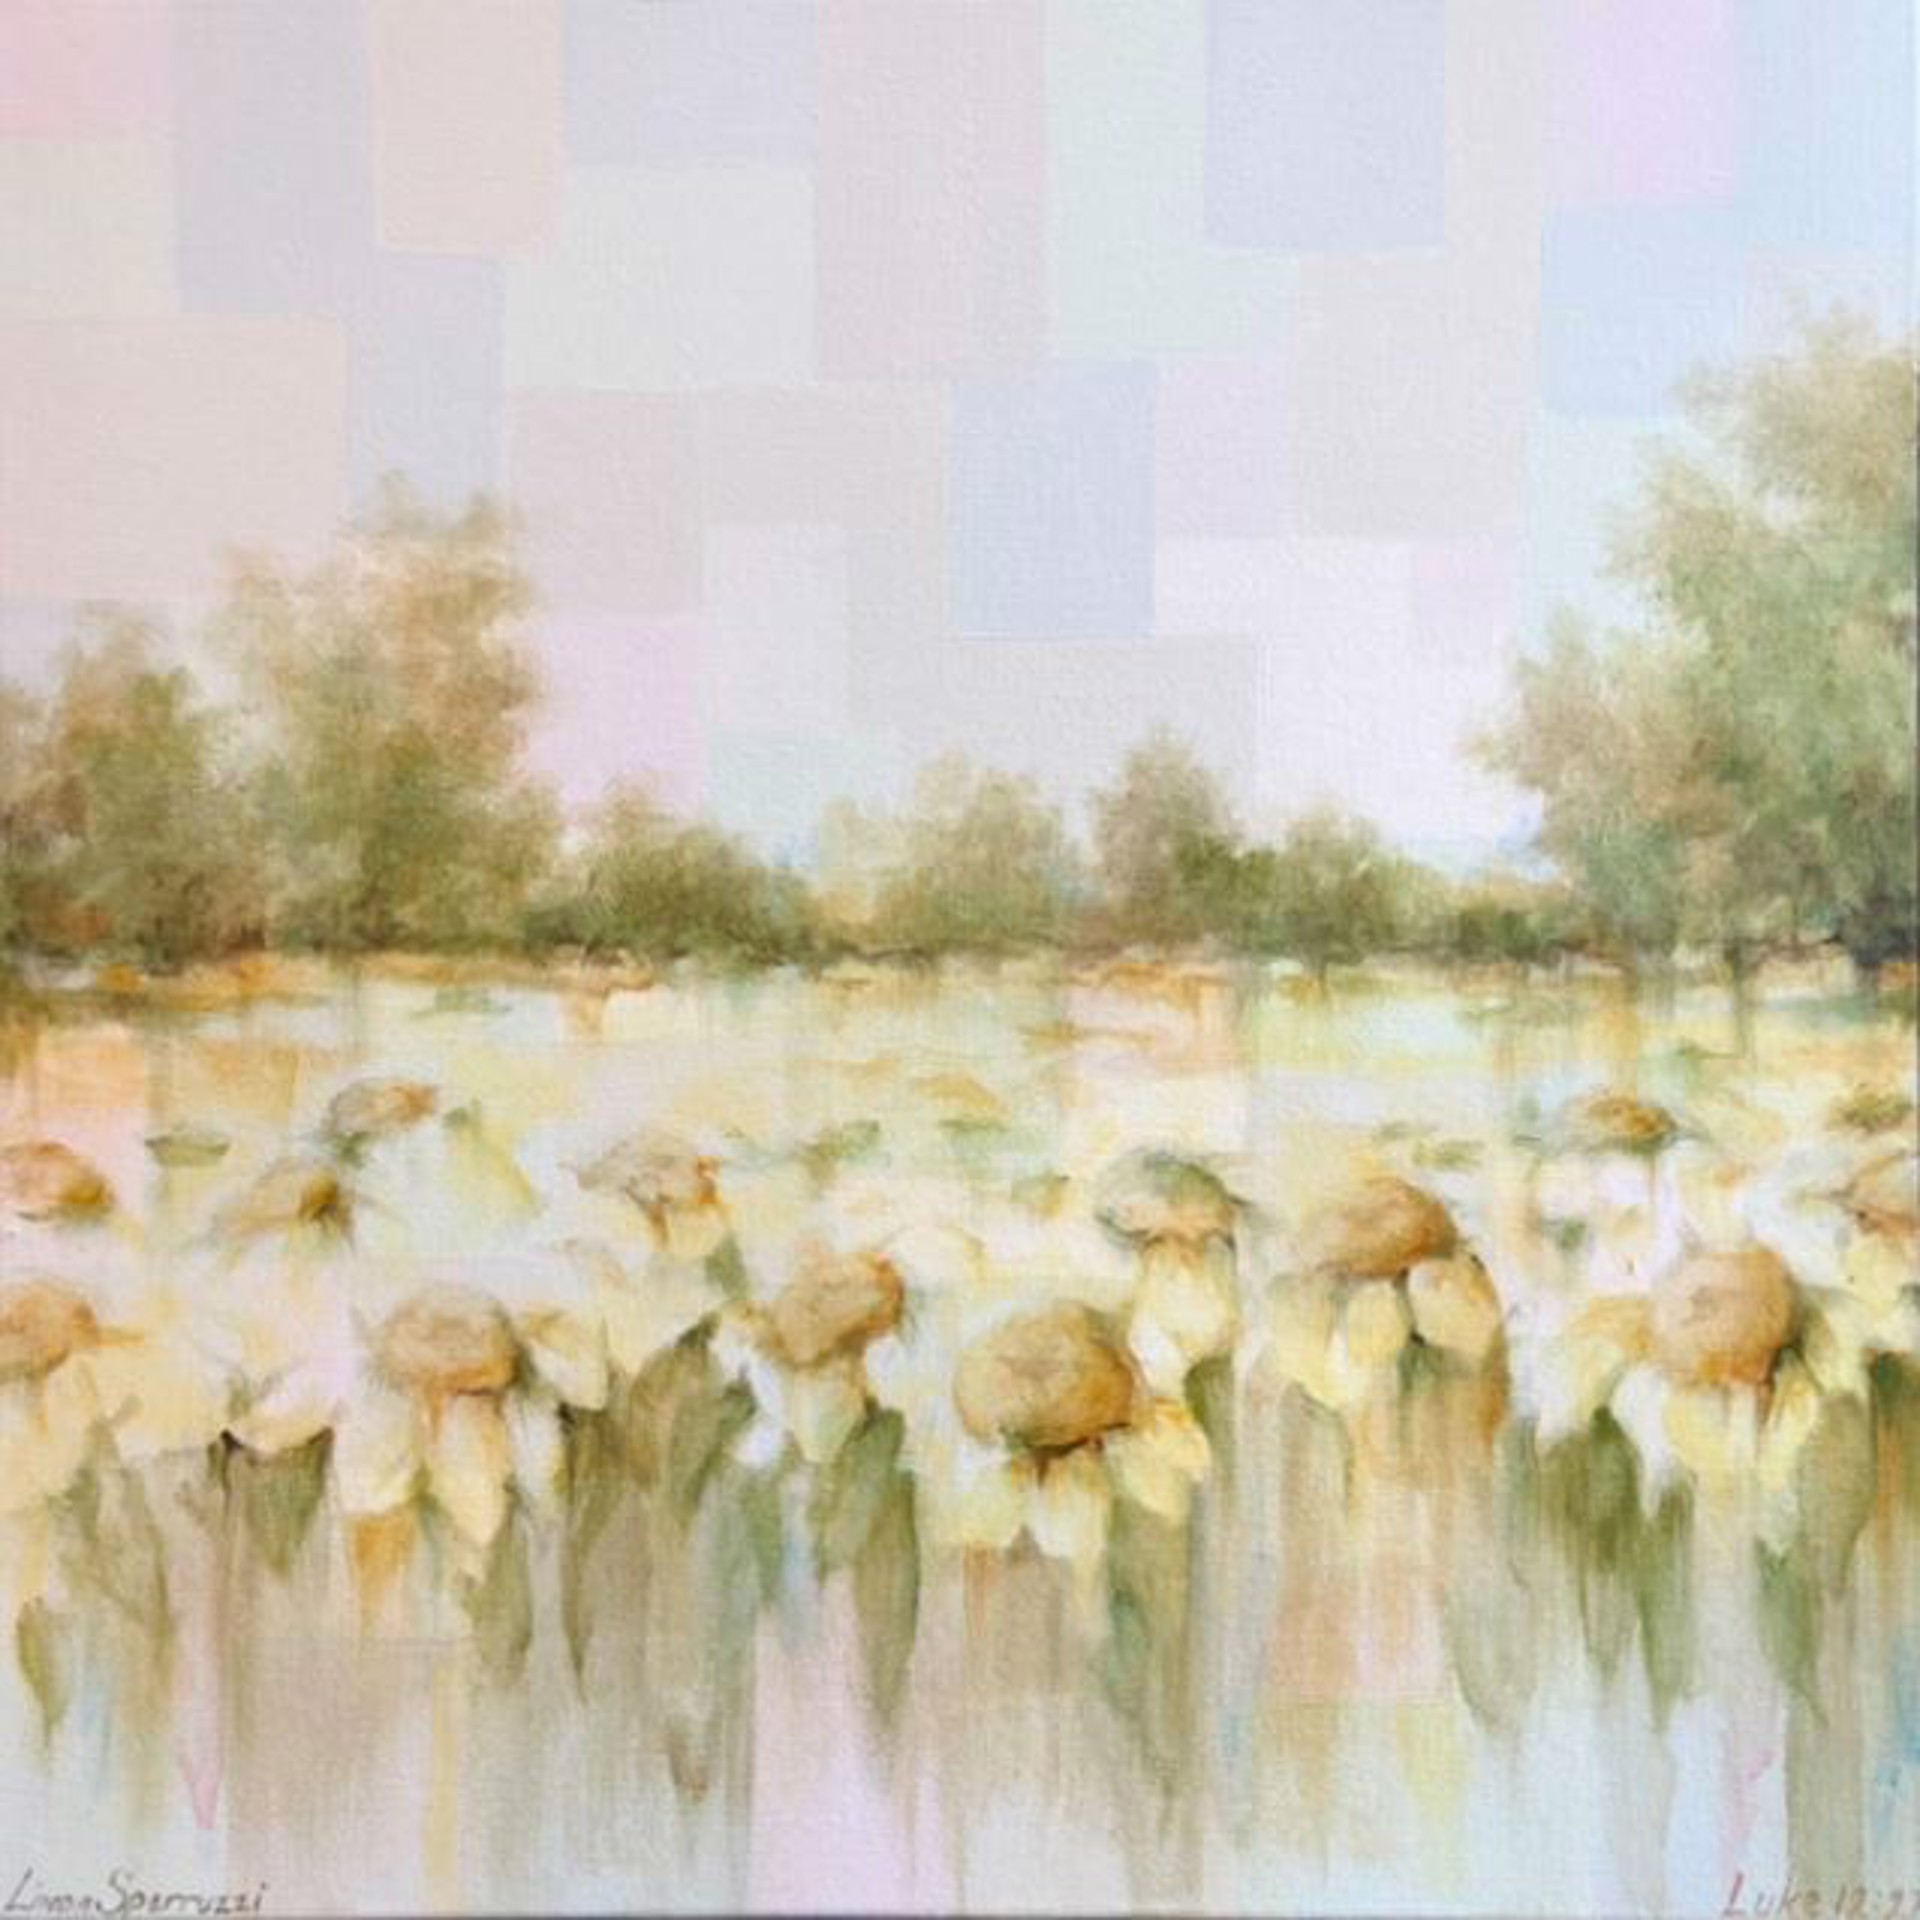 Splendor by Linda Sperruzzi